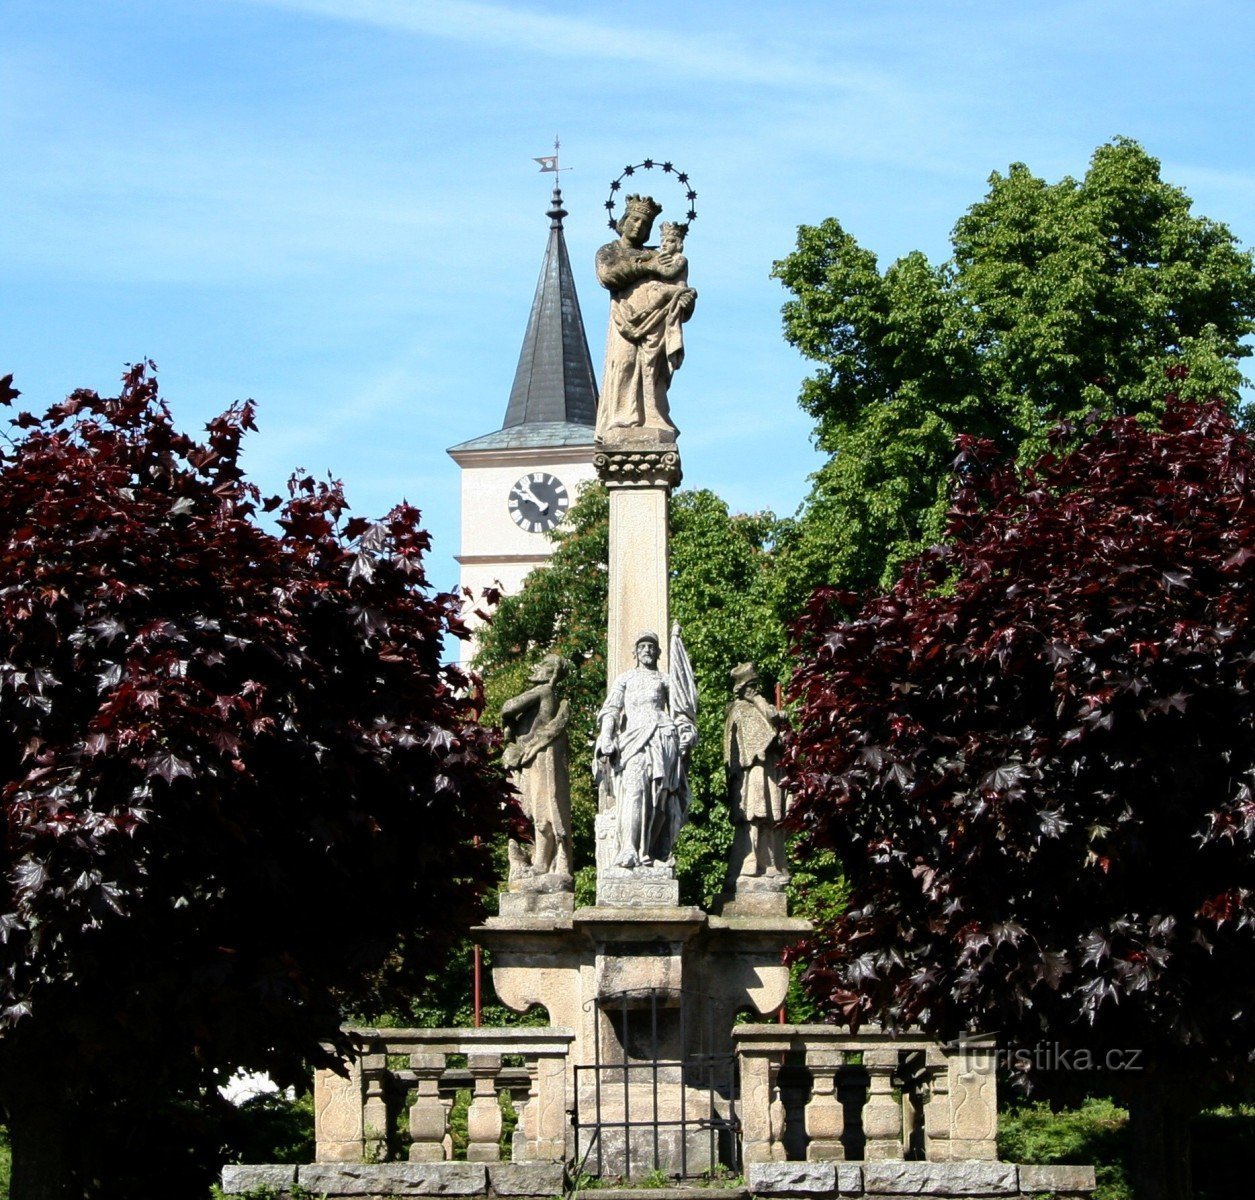 sculptura mariana